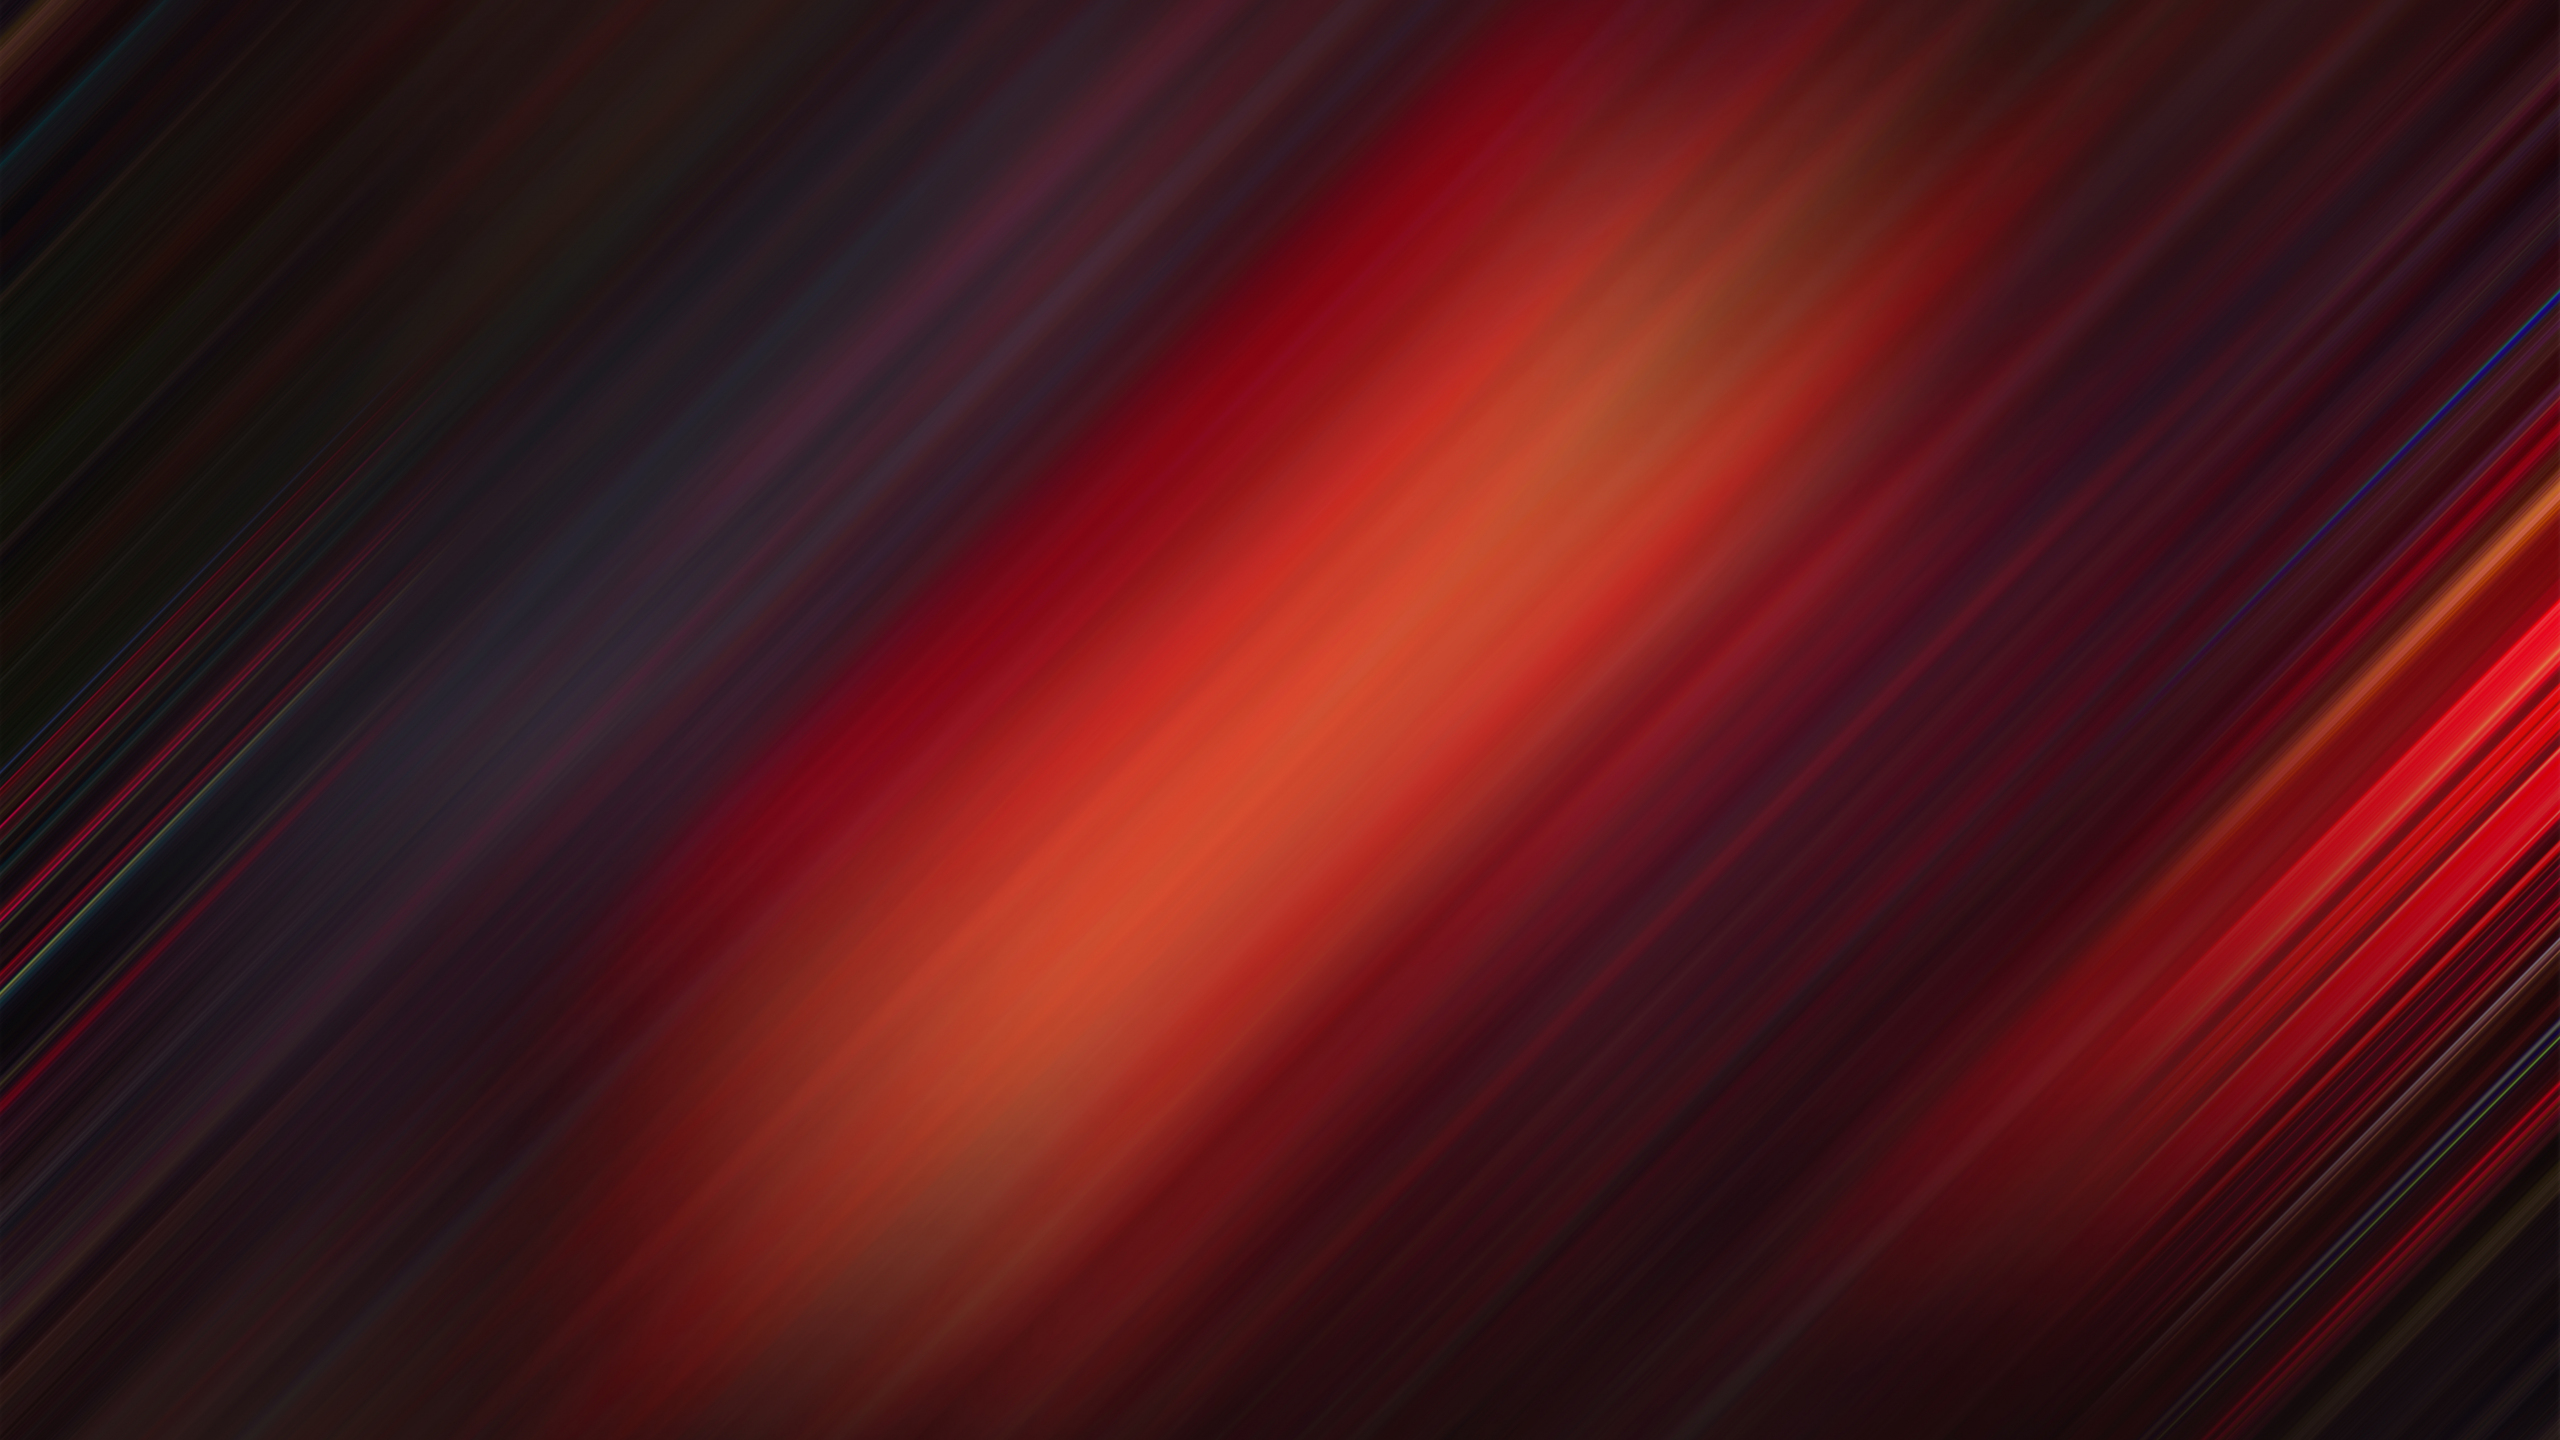 Download Gradient, Stripes, Dark Red, Blur 2560x1440 Wallpaper, Dual Wide 16:9 2560x1440 HD Image, Background, 22080